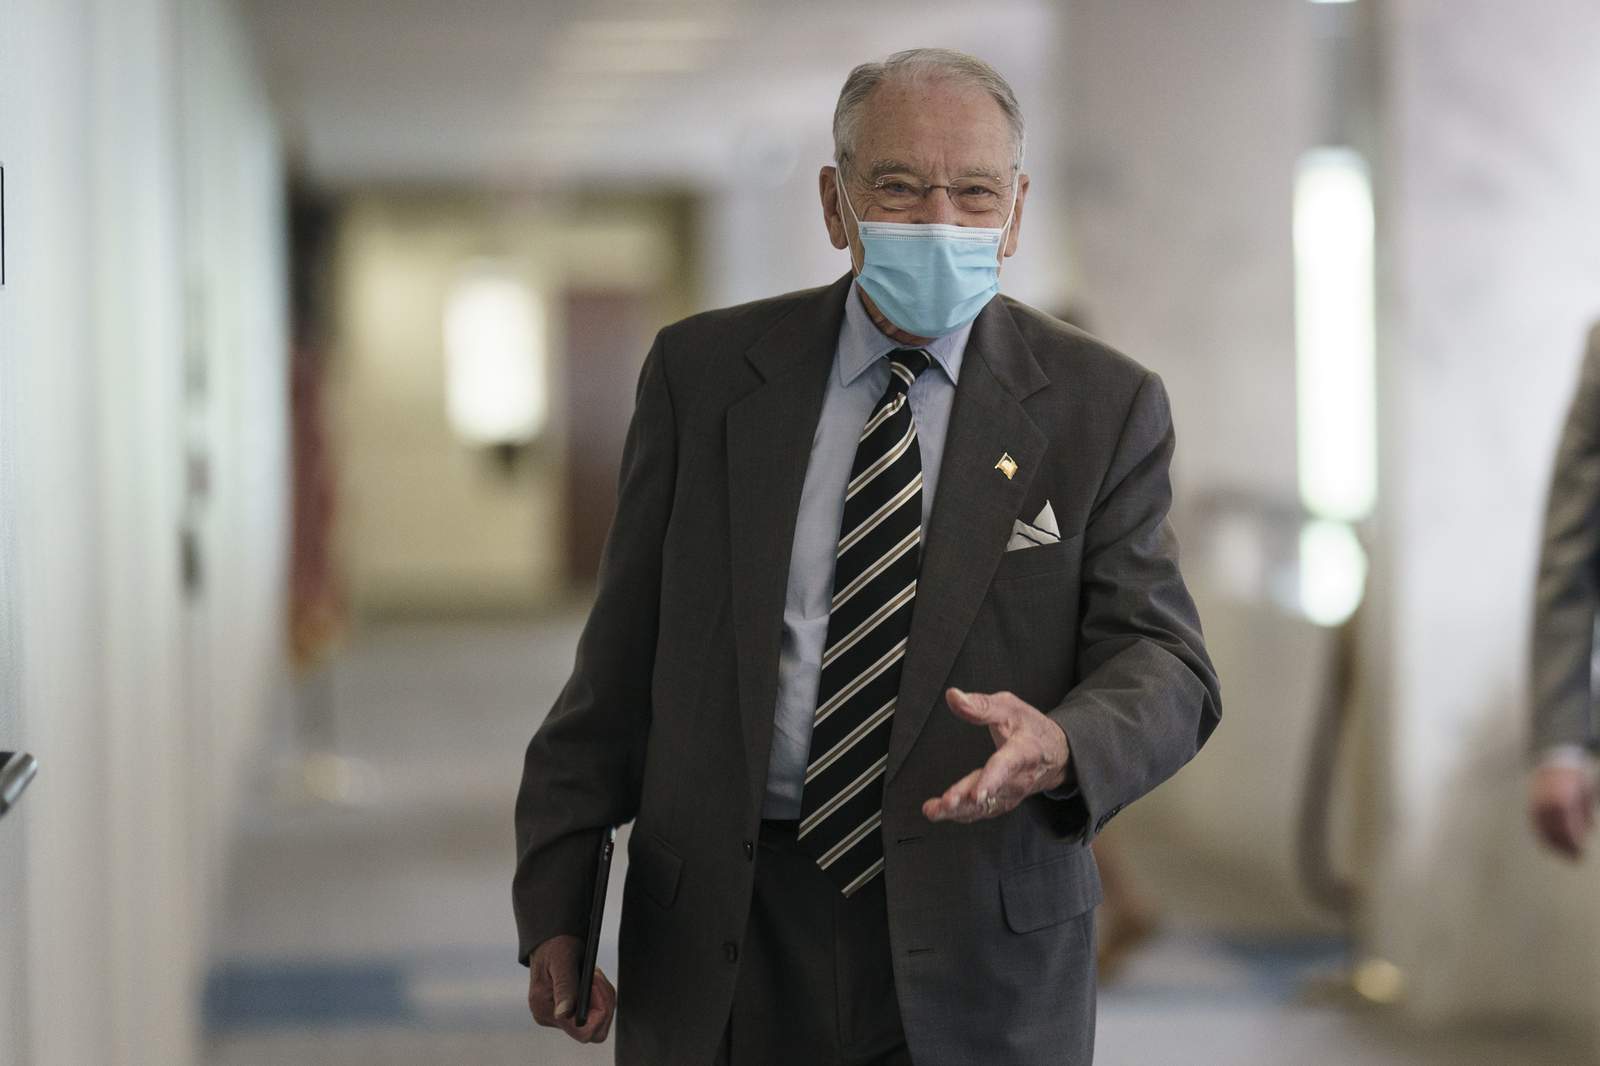 Sen. Grassley returns to Senate after coronavirus isolation